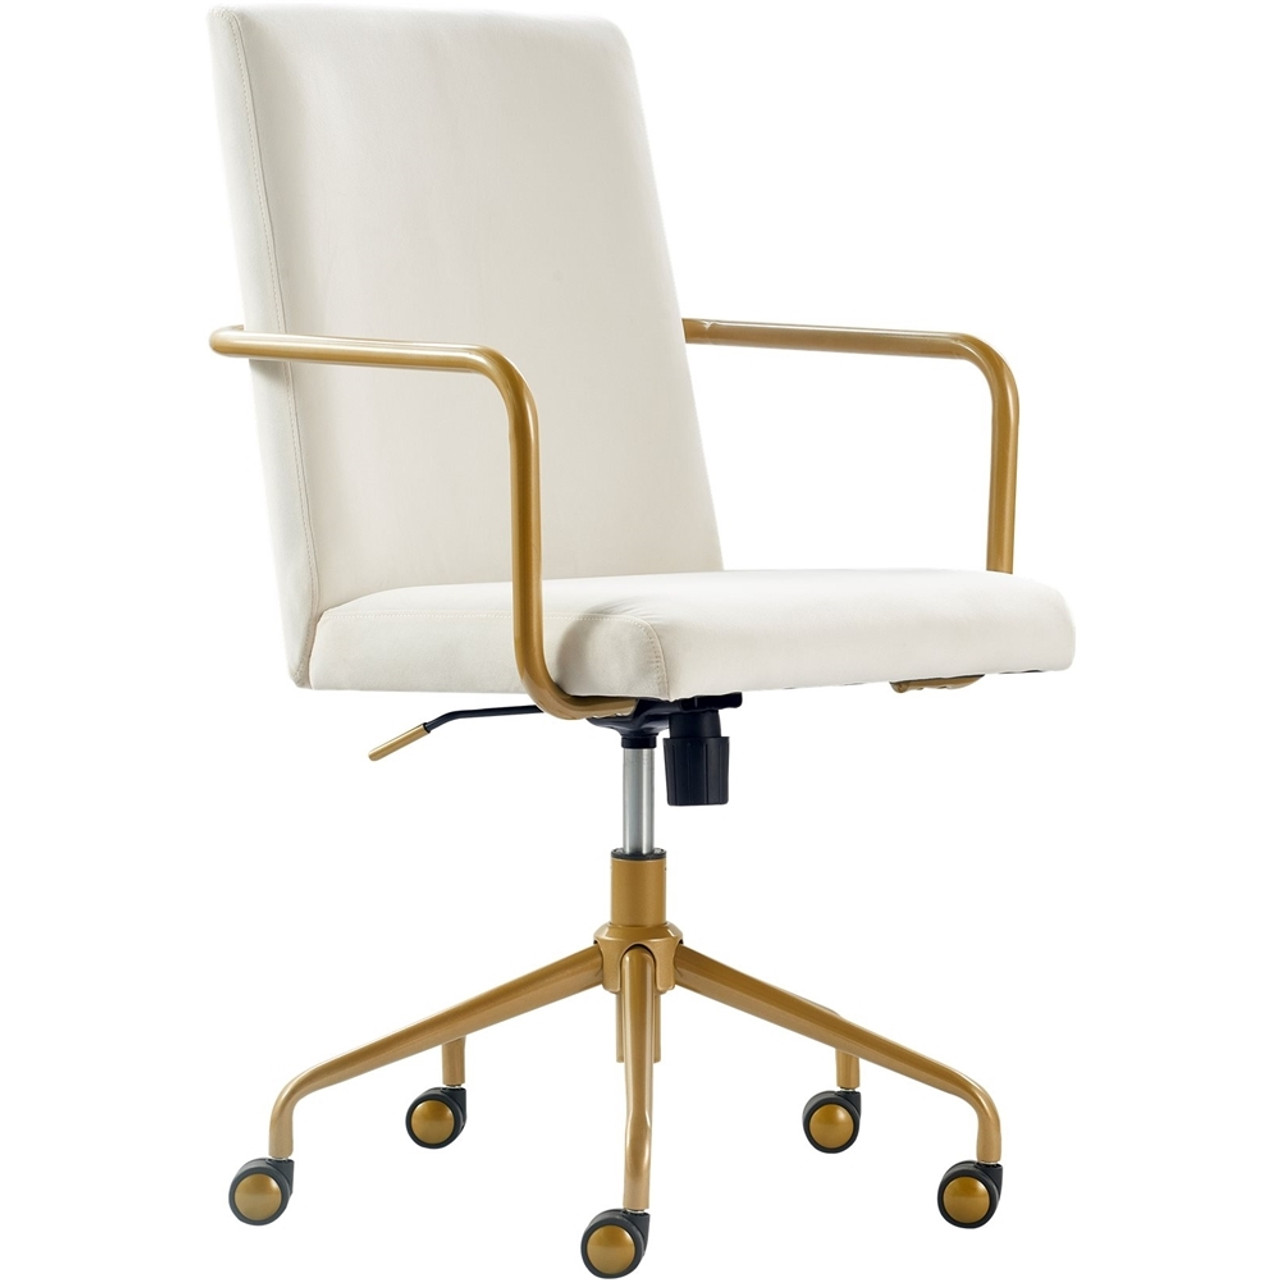 Elle Decor - Giselle Mid-Century Modern Fabric Executive Chair - Gold/Velvet Cream